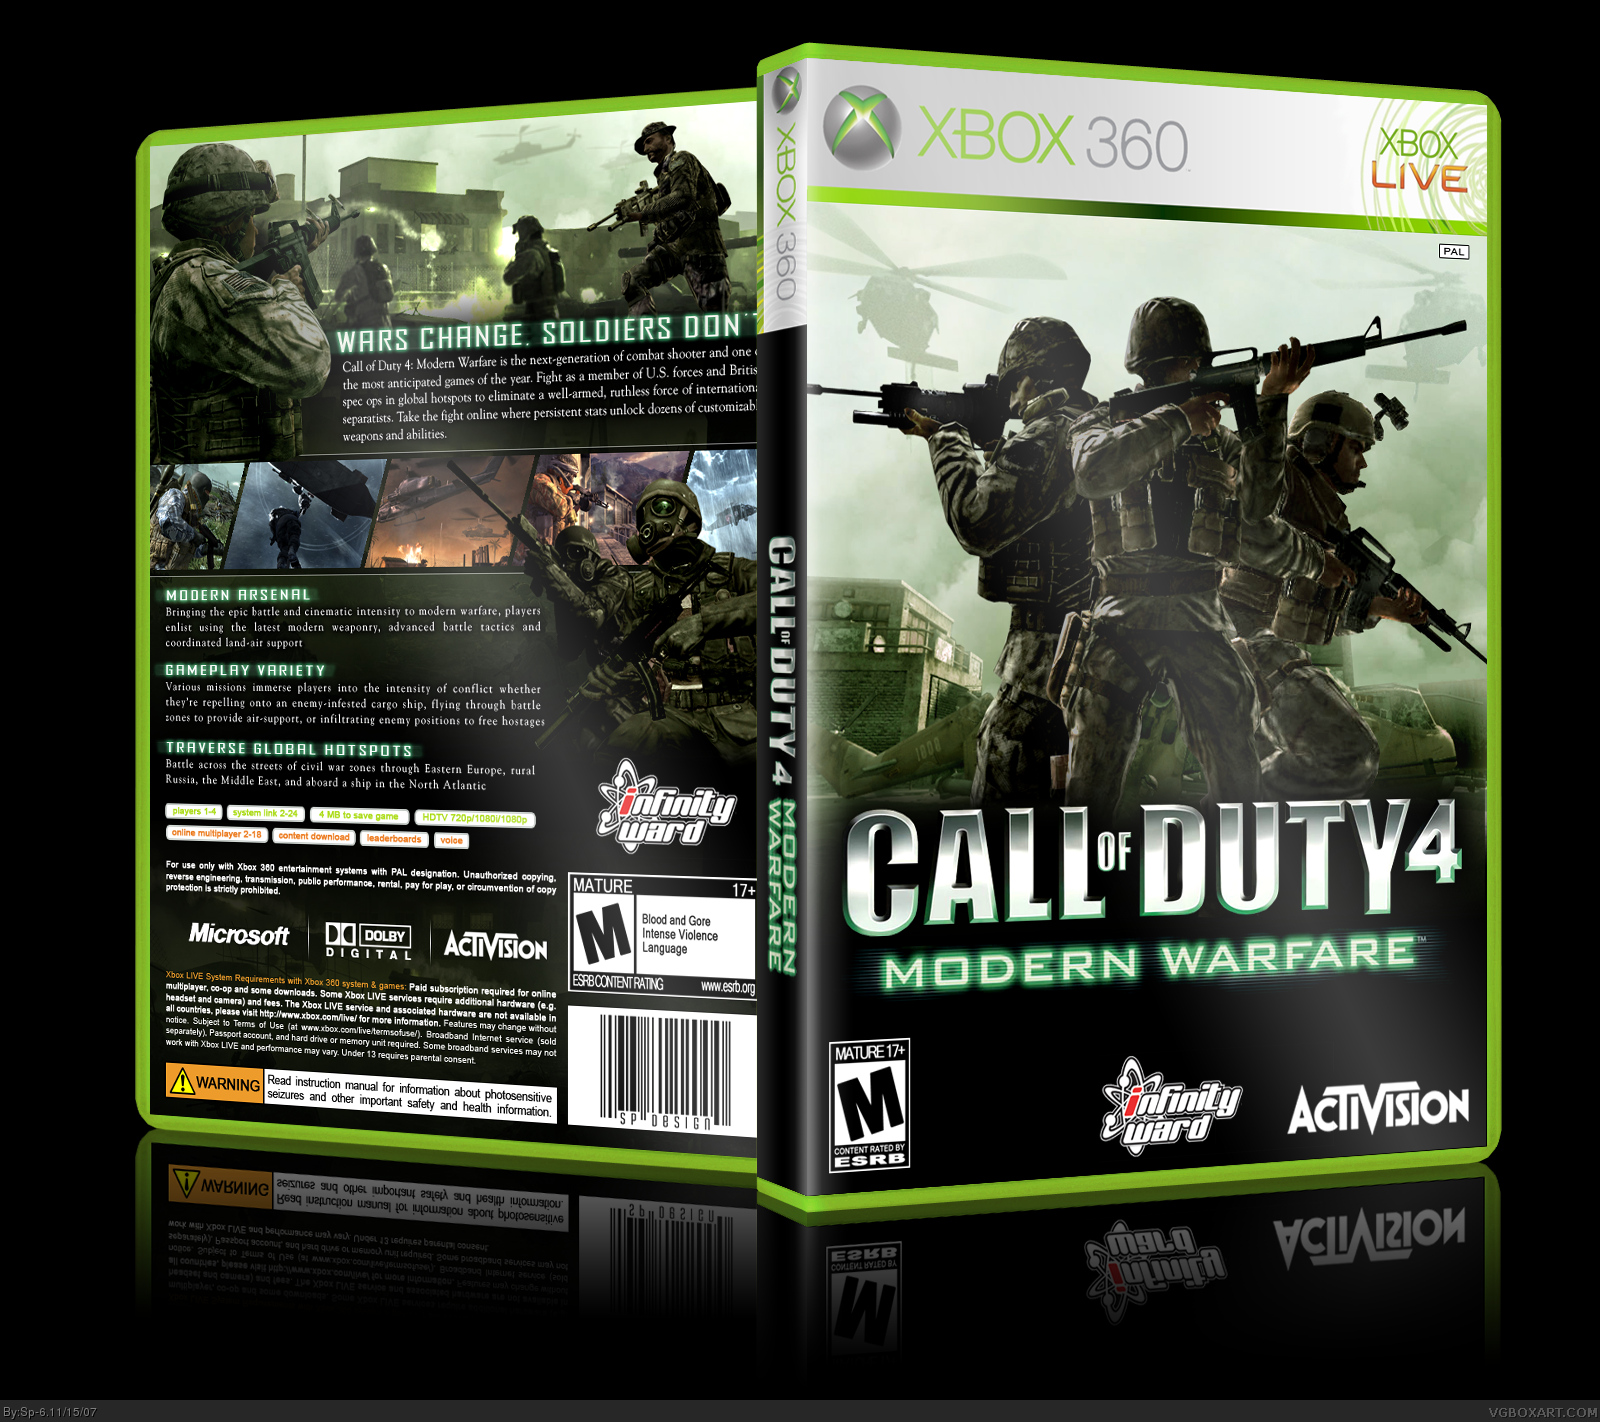 Call of Duty 4: Modern Warfare box cover